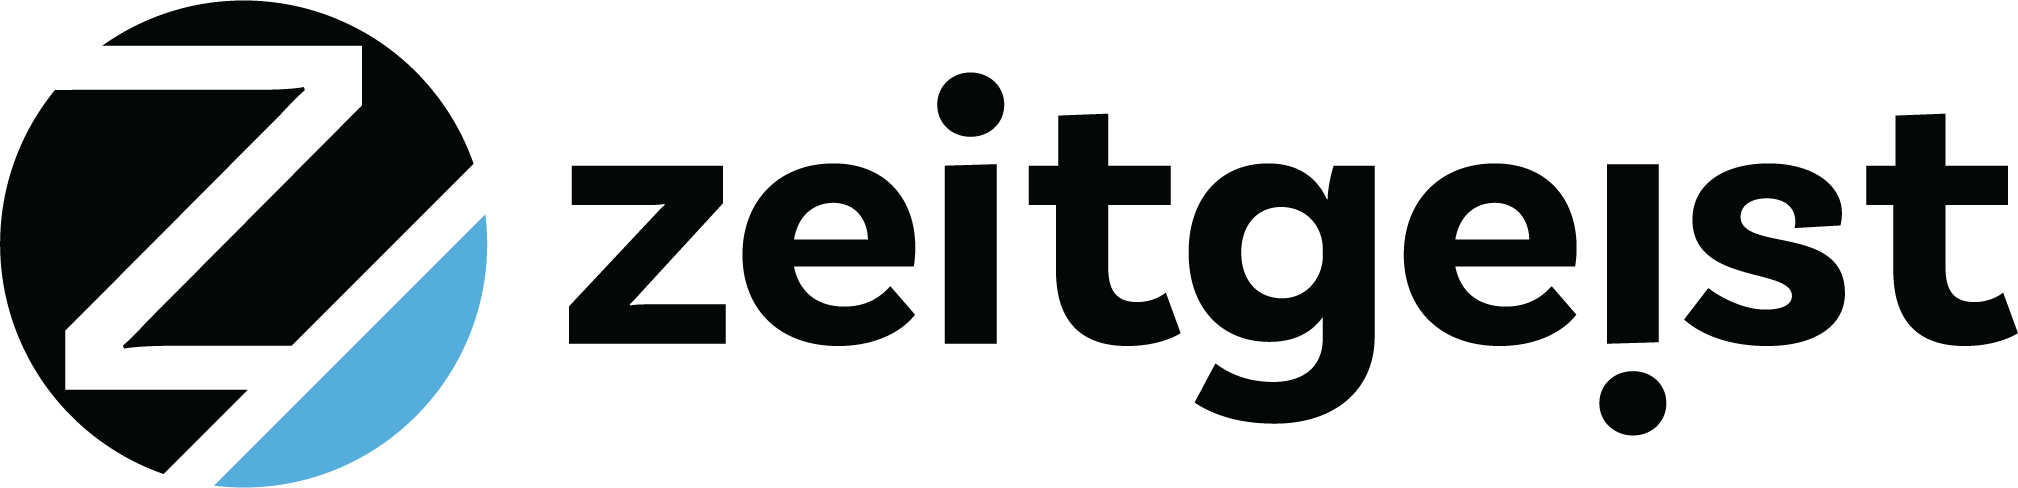 Zeitgeist-Logo-Primary.png